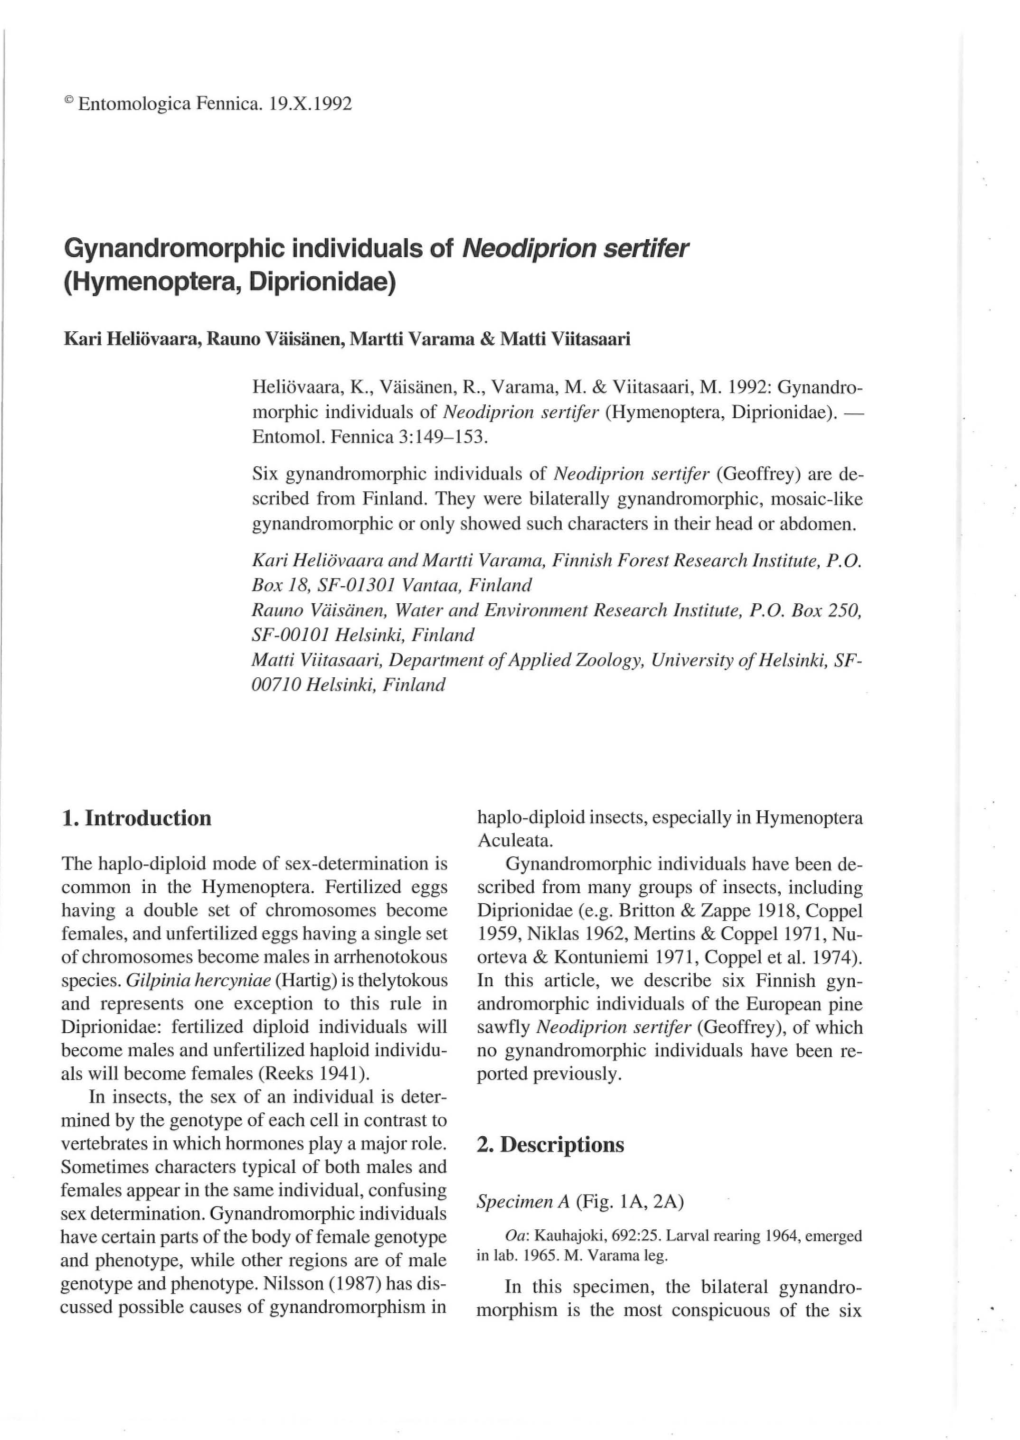 Gynandromorphic Individuals of Neodiprion Sertifer (Hymenoptera, Diprionidae)